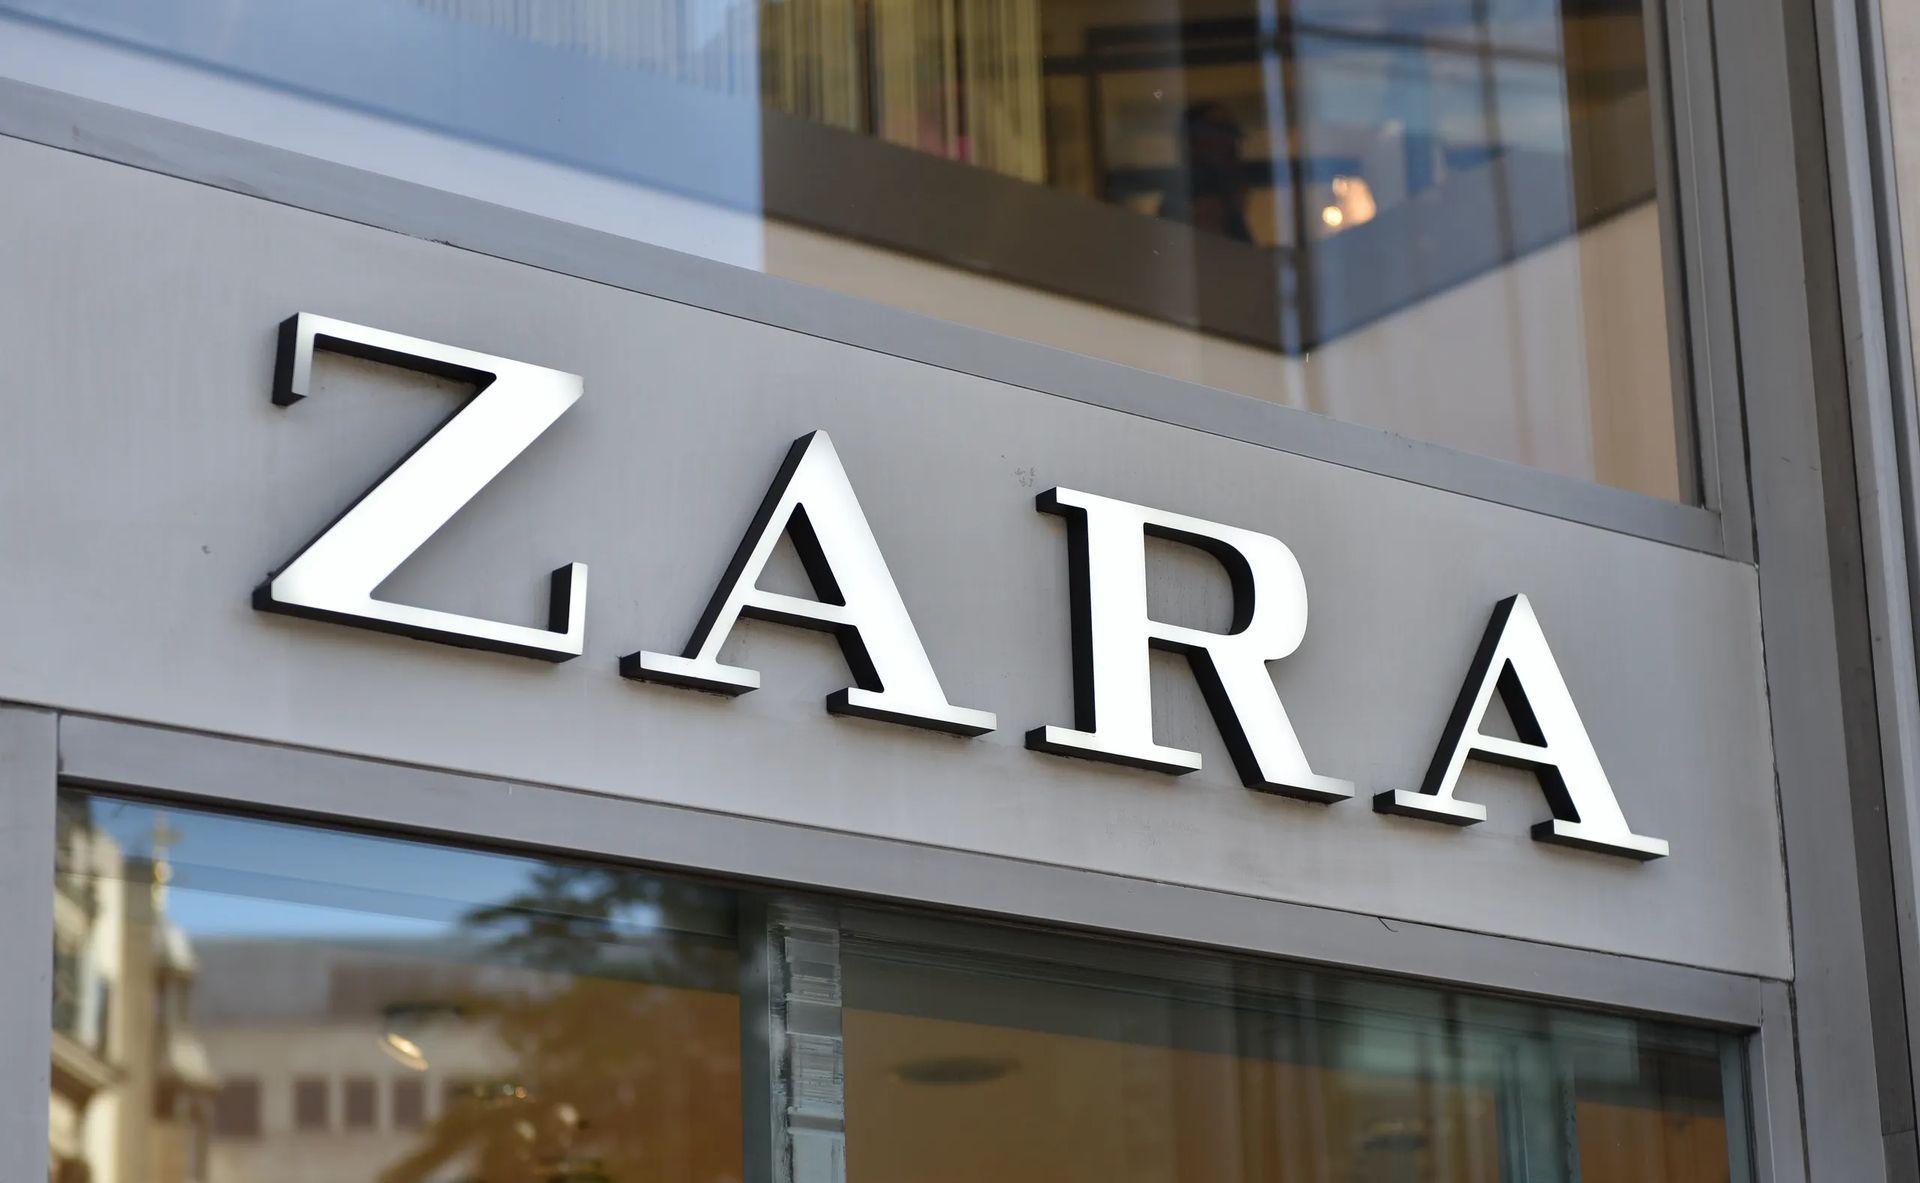 The secrets of ZARA's $13 billion empire